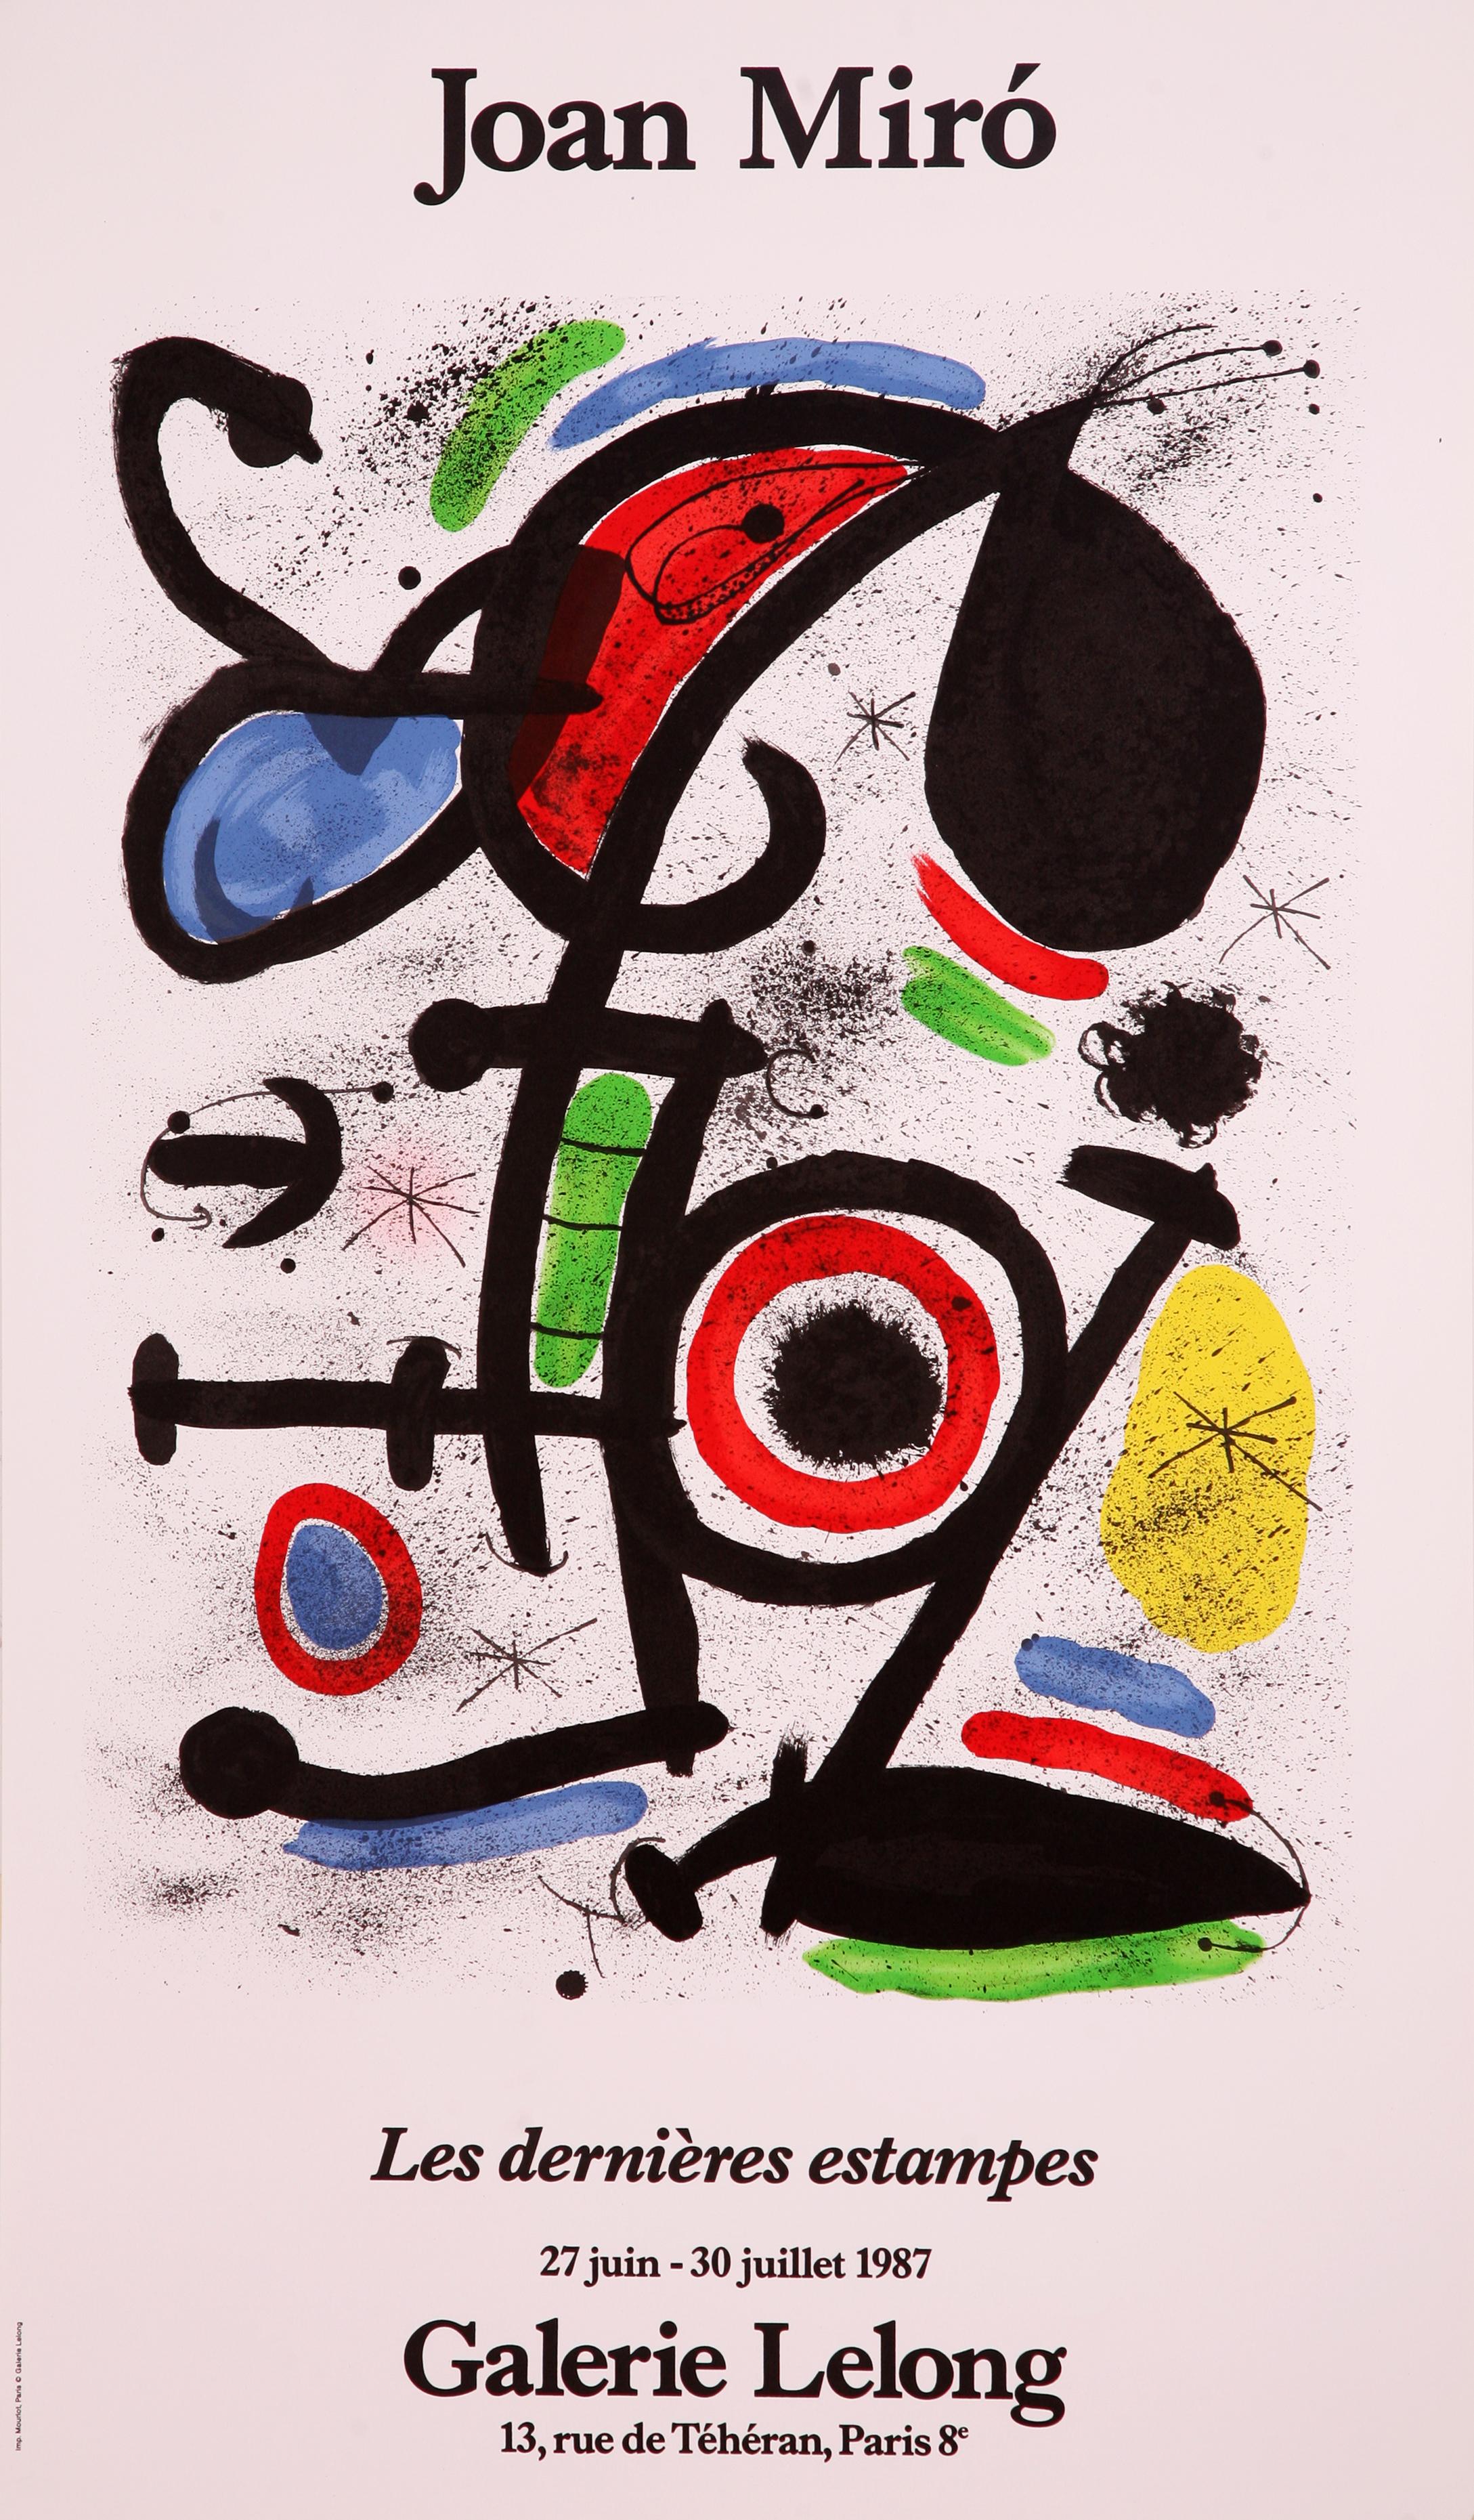 Joan Miró Abstract Print - Les Derniers Estampes-Galerie Lelong by Joan Miro (abstract print)